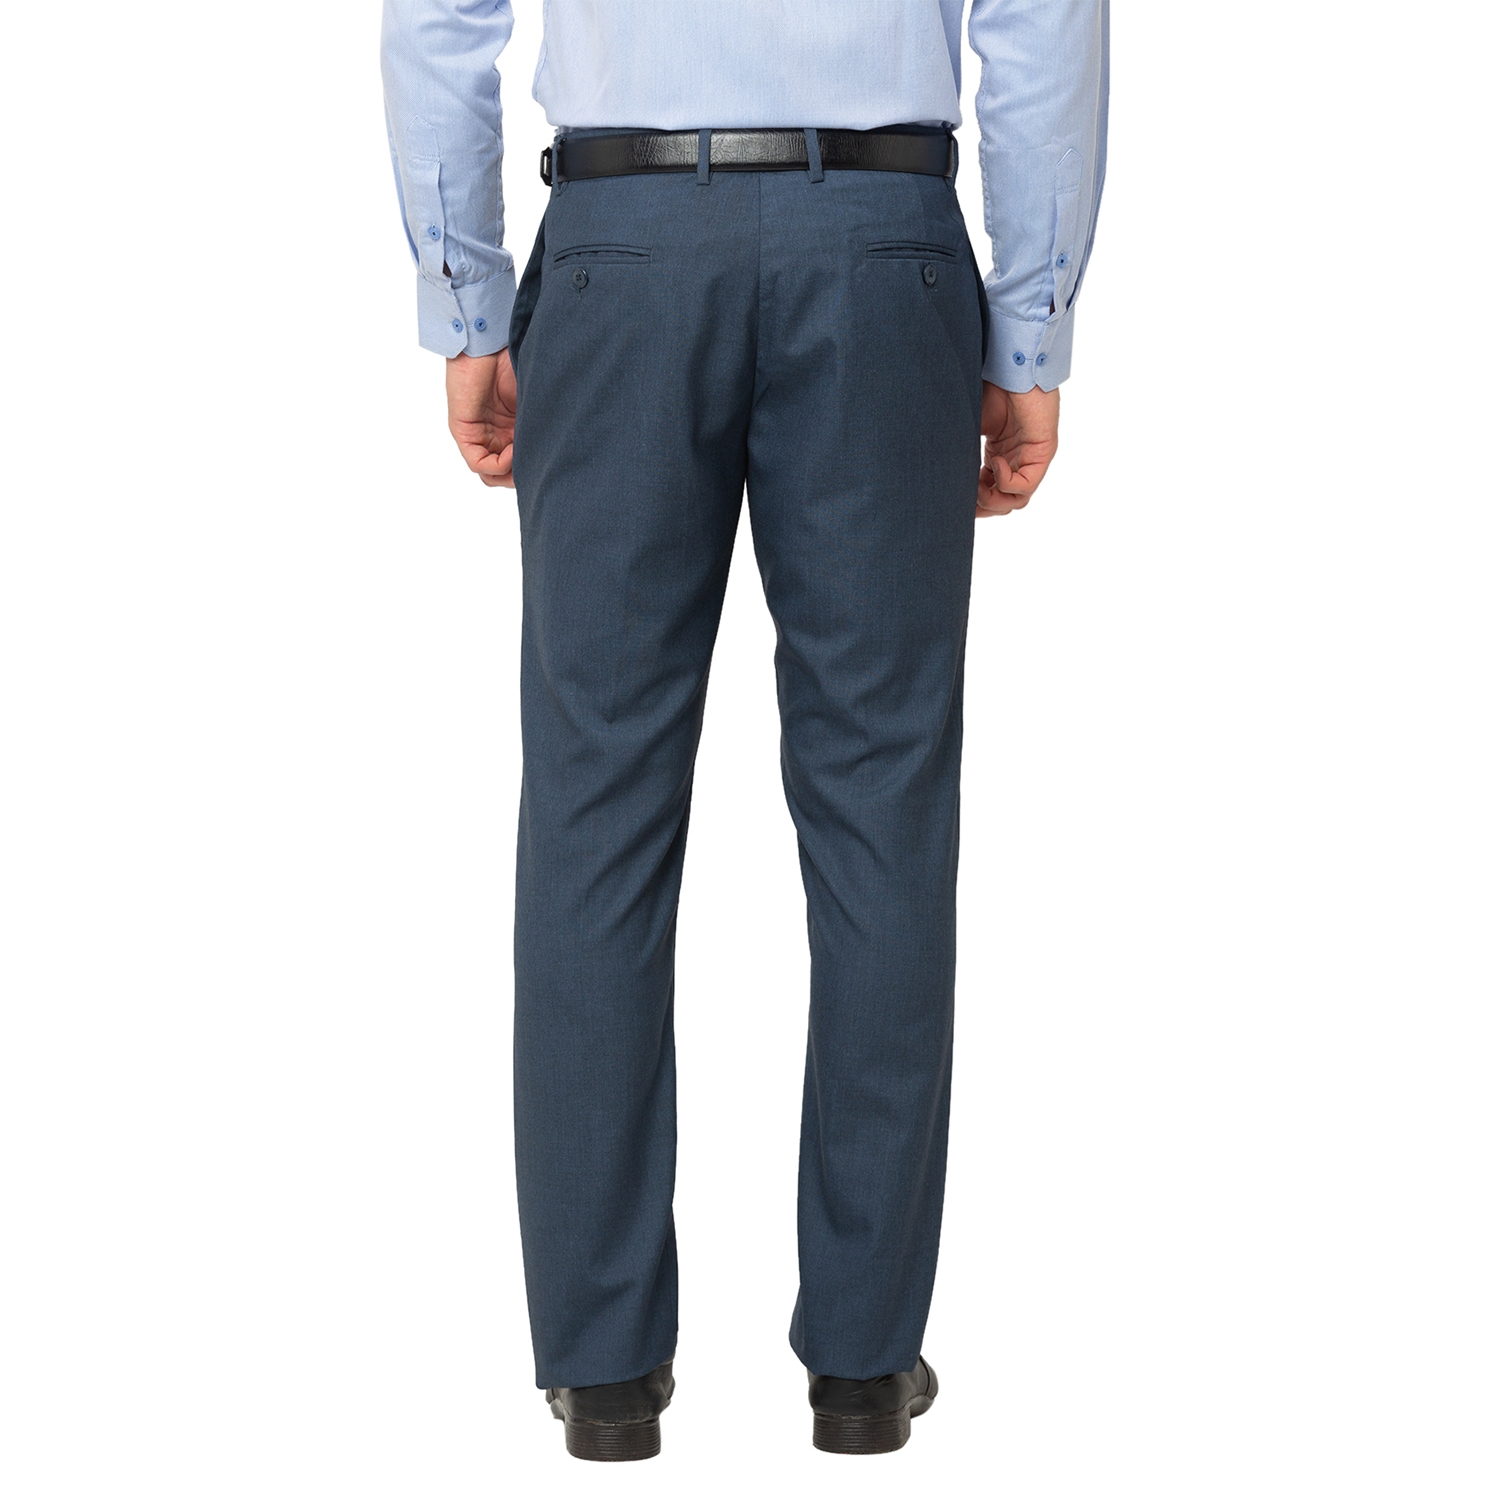 globus | Men's Blue Cotton Blend Solid Formal Trousers 2